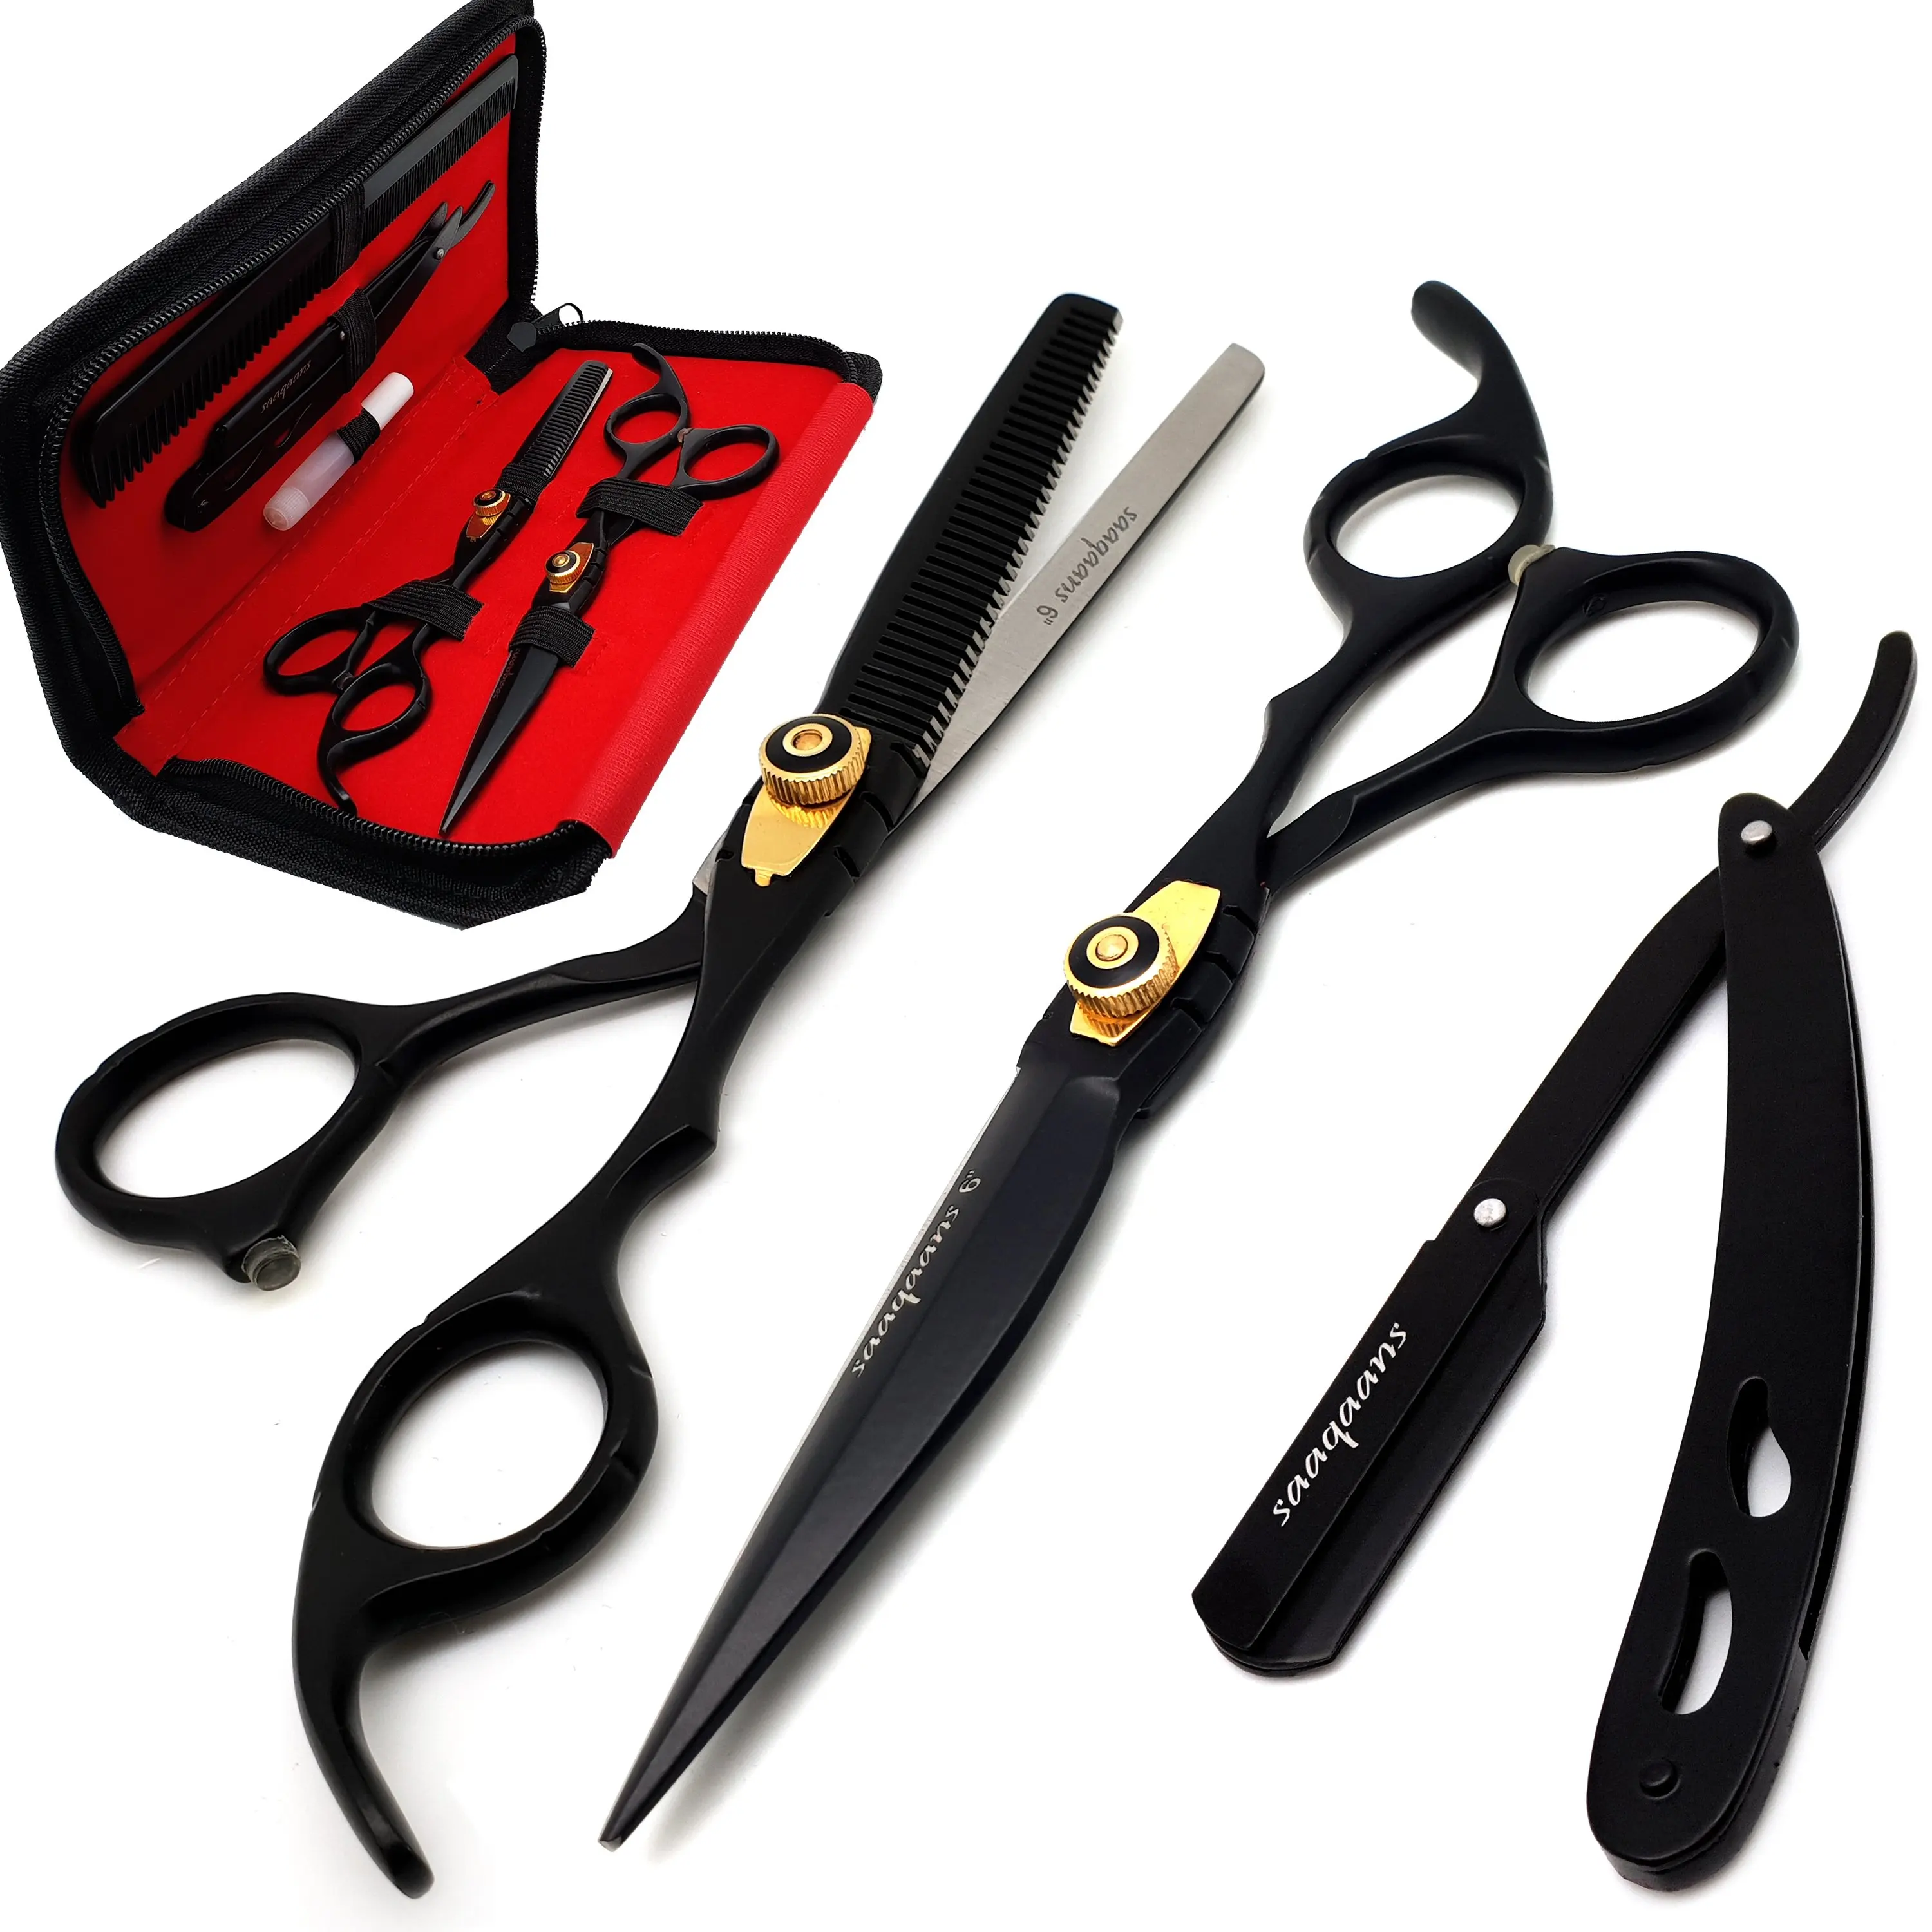 salon quality scissors